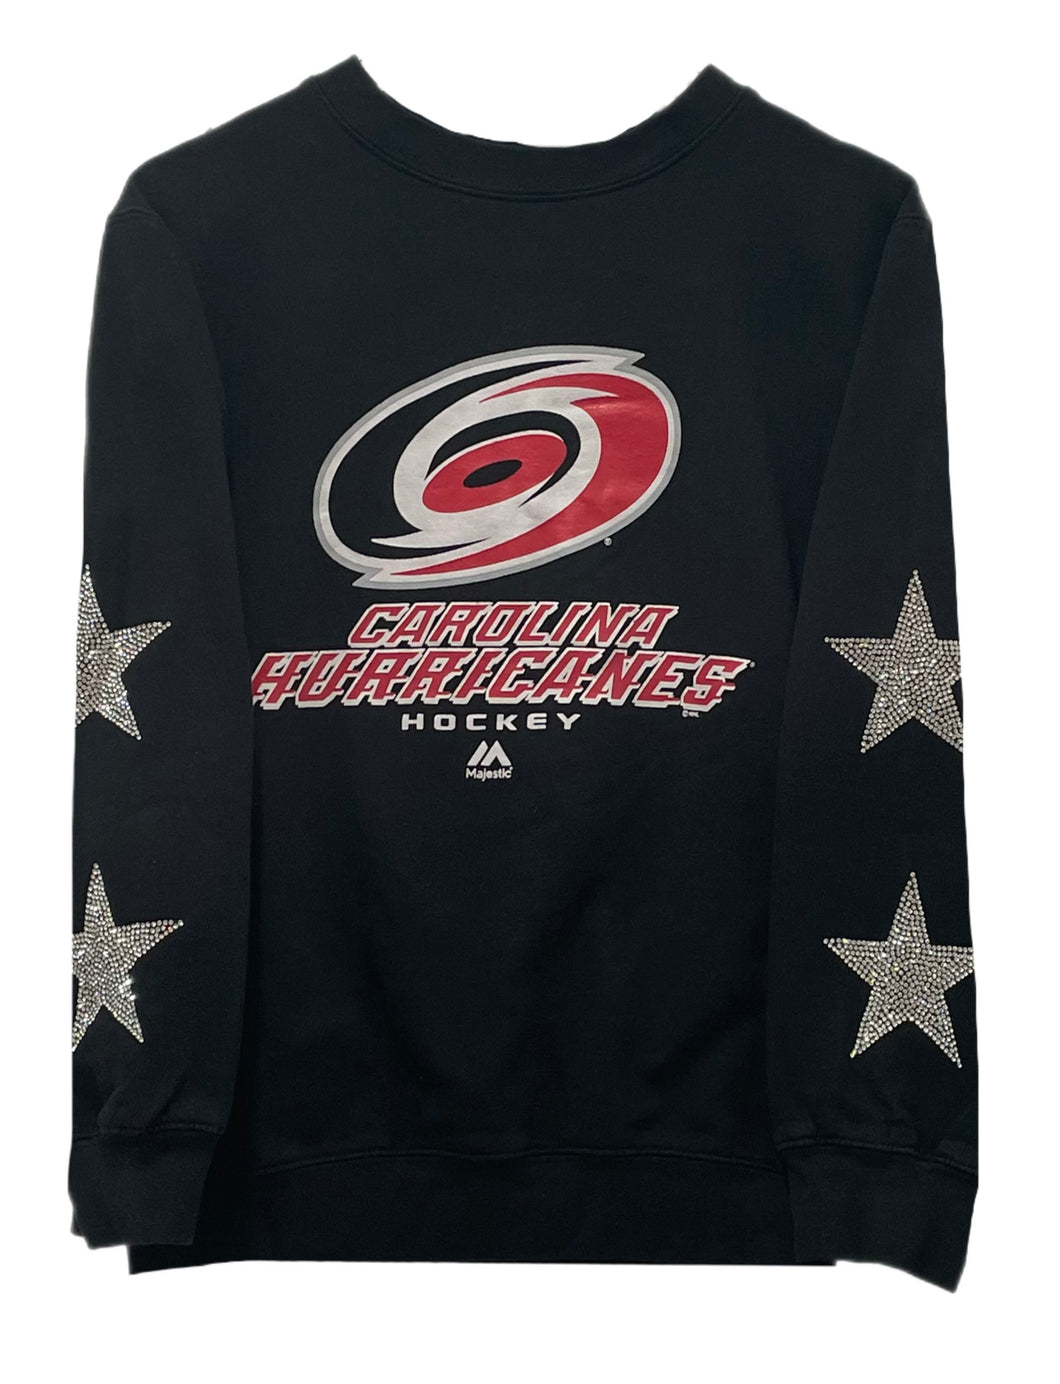 Carolina Hurricanes, Hockey One of a KIND Vintage Sweatshirt with Crystal Stars Design